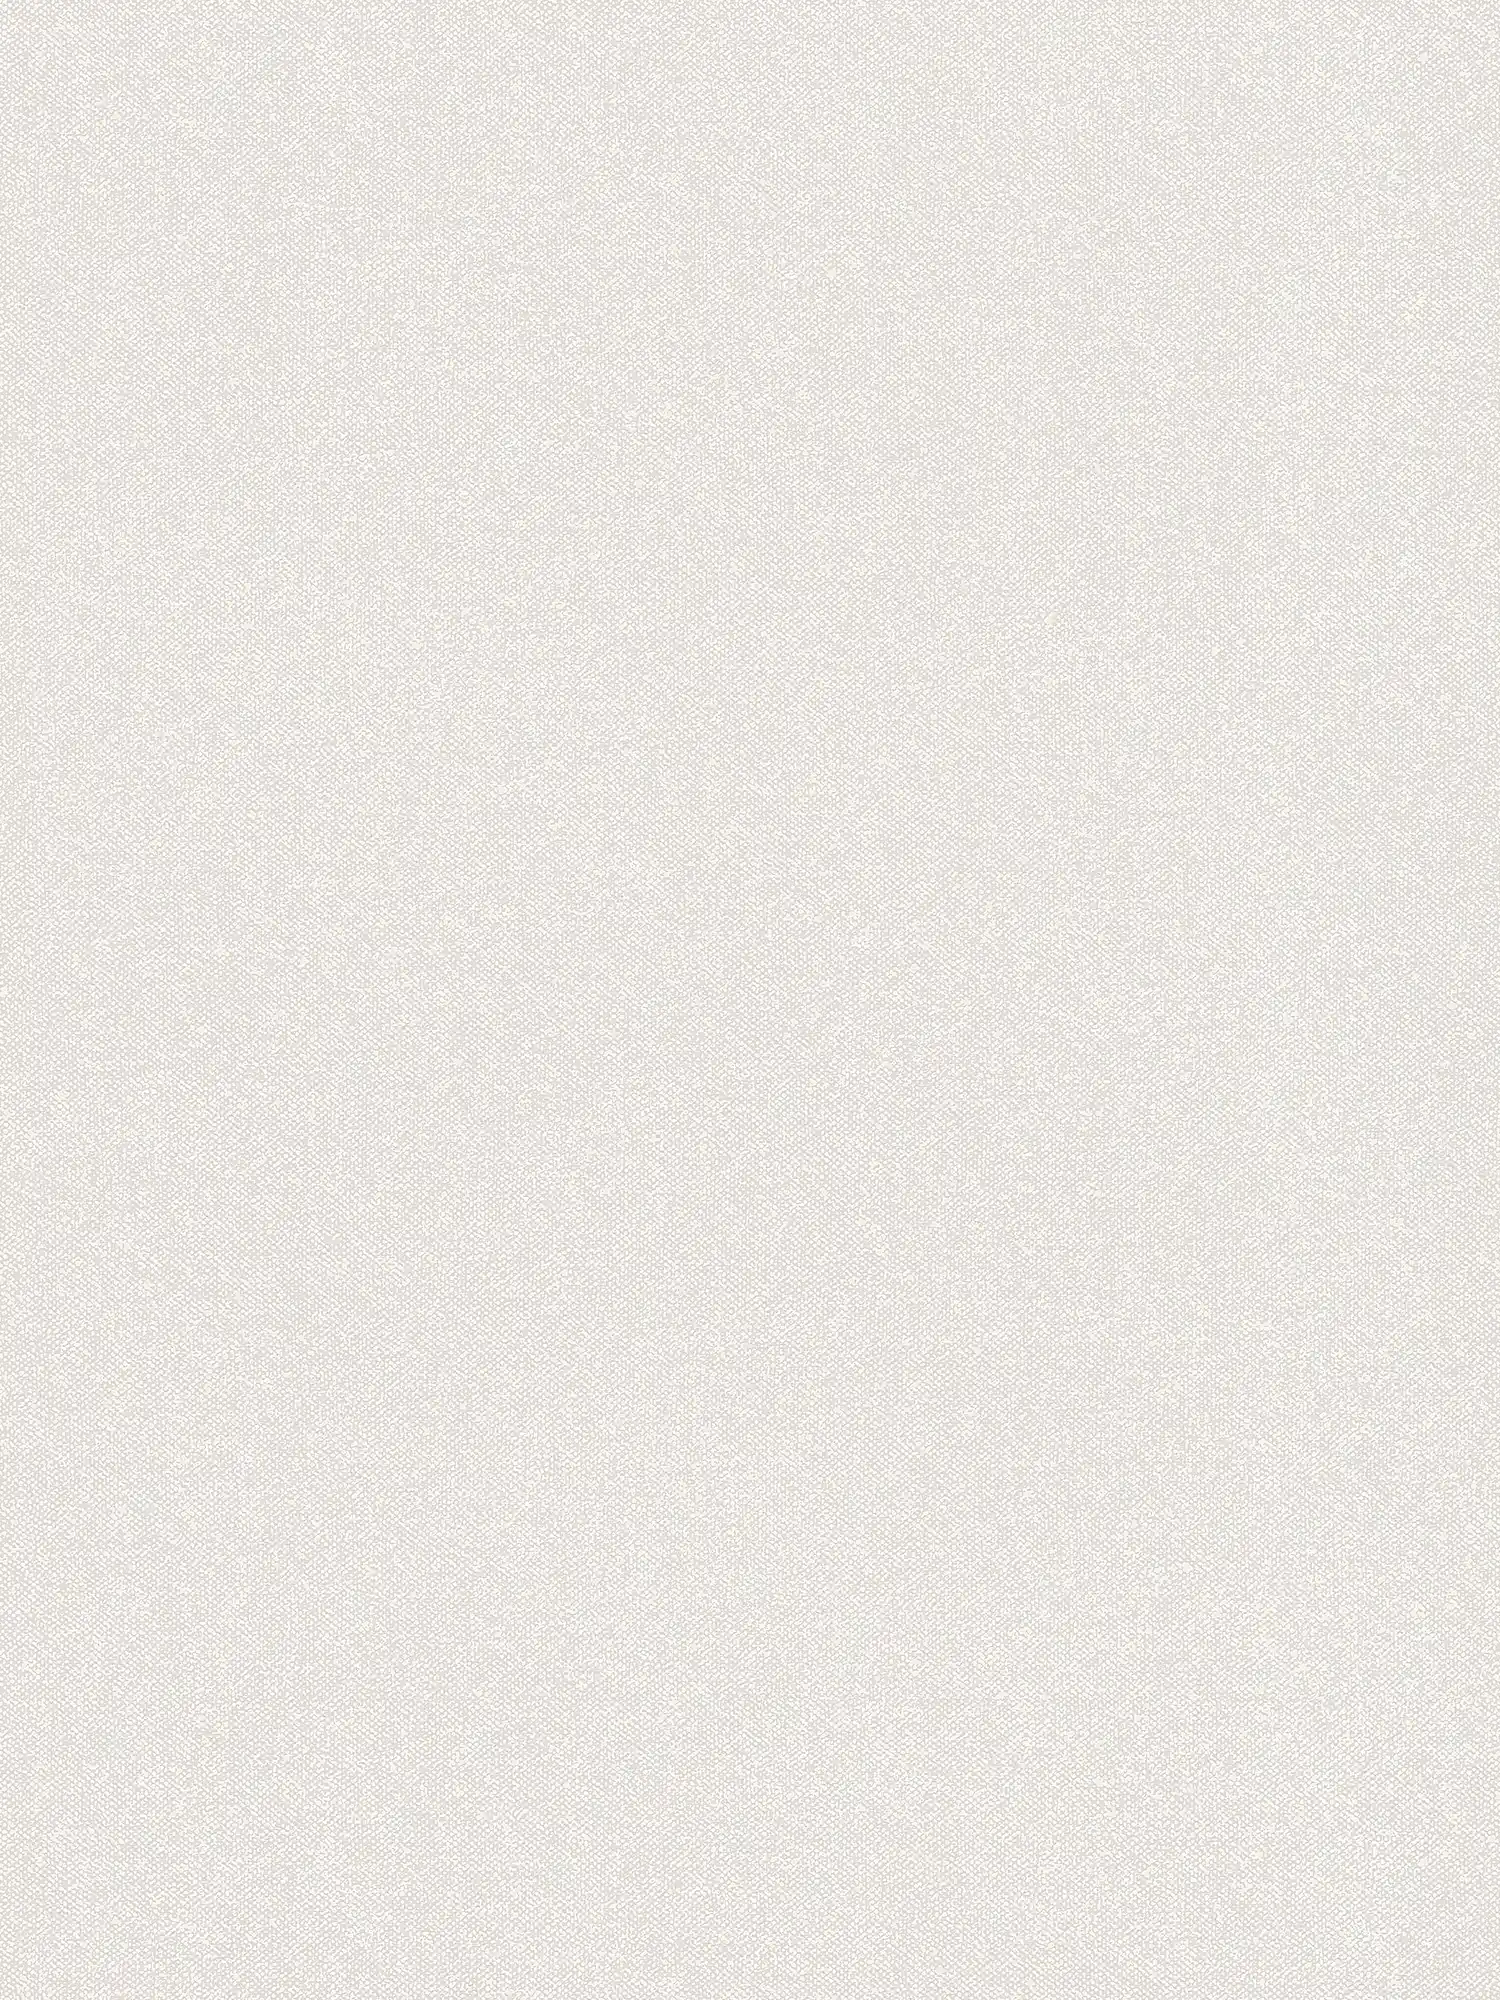 Textured wallpaper plain with linen look - cream, grey, white
